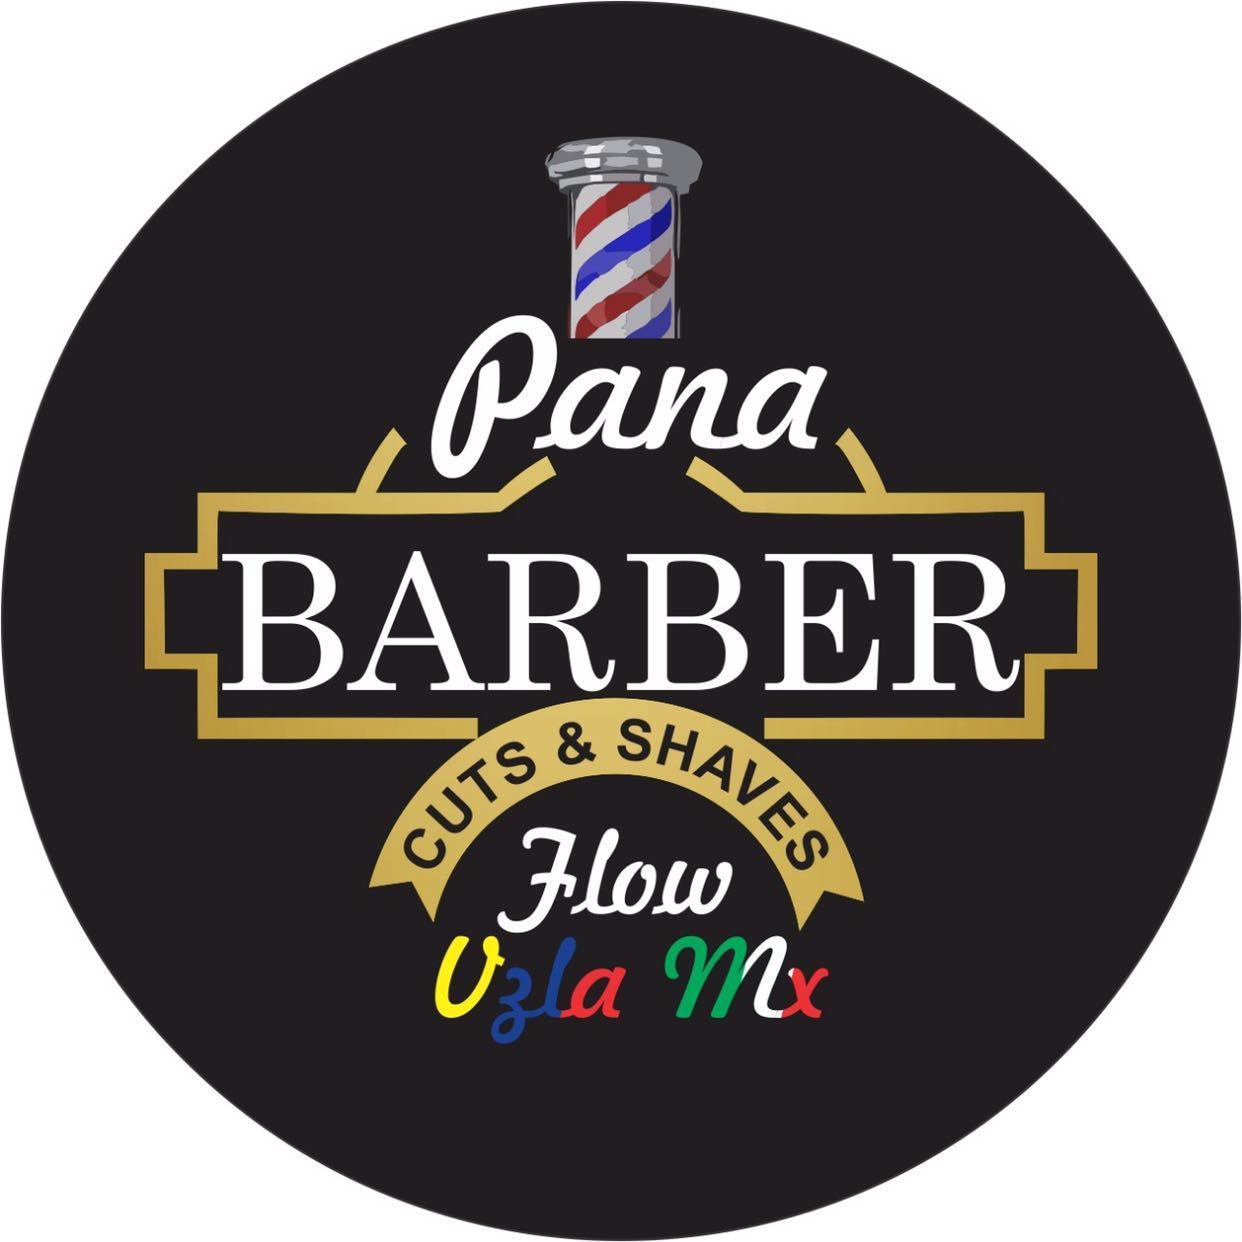 El Pana Barber Flow 🇻🇪💈🇲🇽, Plaza Universitarios, 07, 80030, Culiacán Rosales